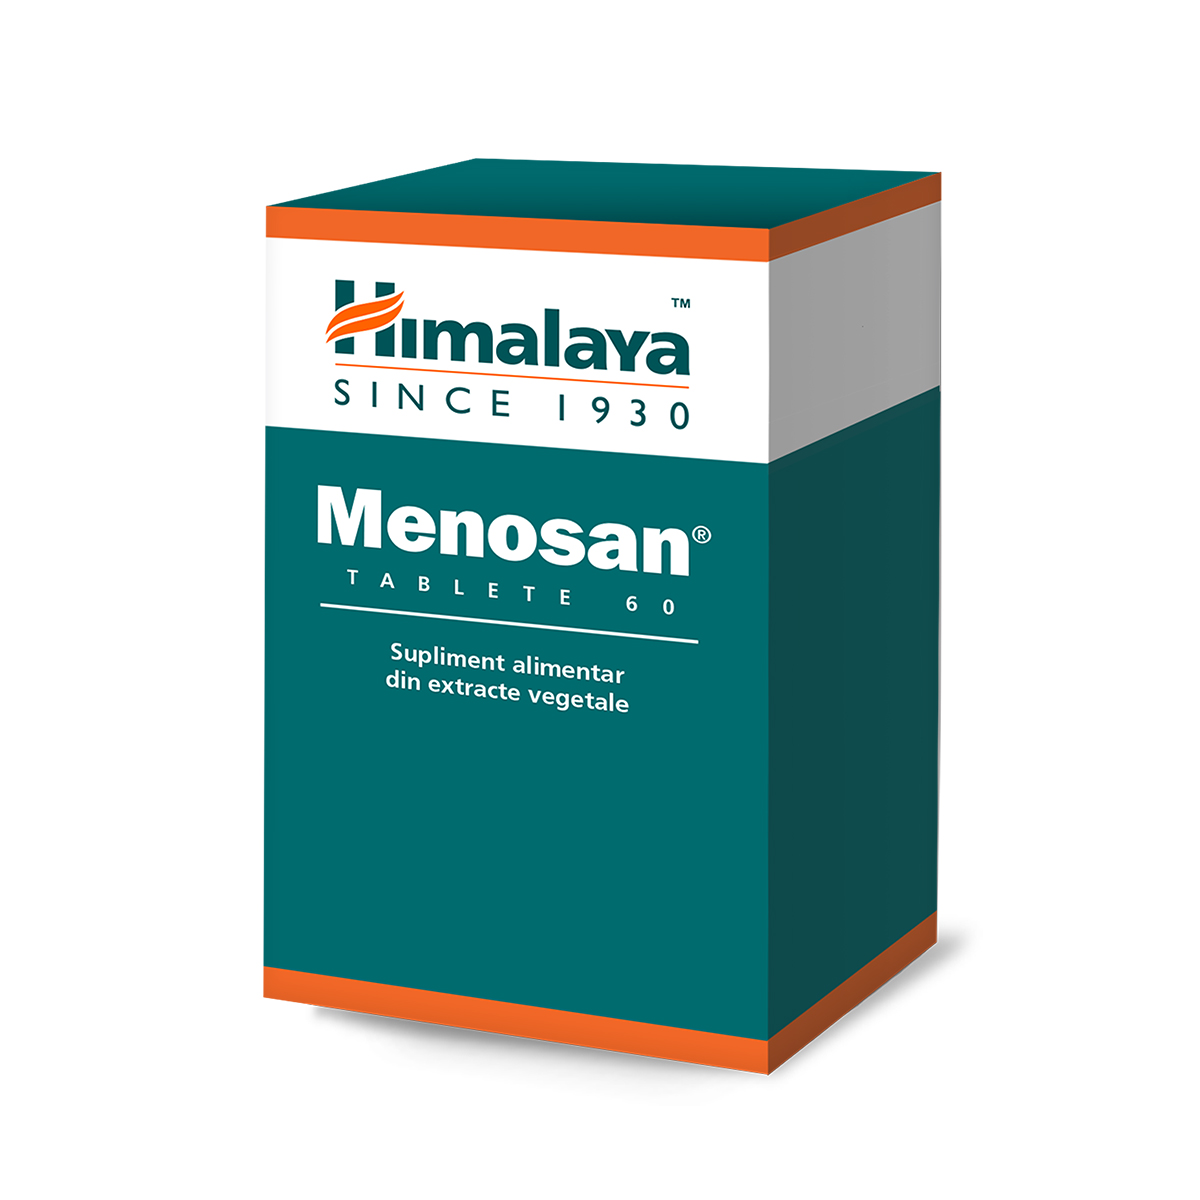 Menopauza si premenopauza - Menosan, 60 tablete, Himalaya, sinapis.ro